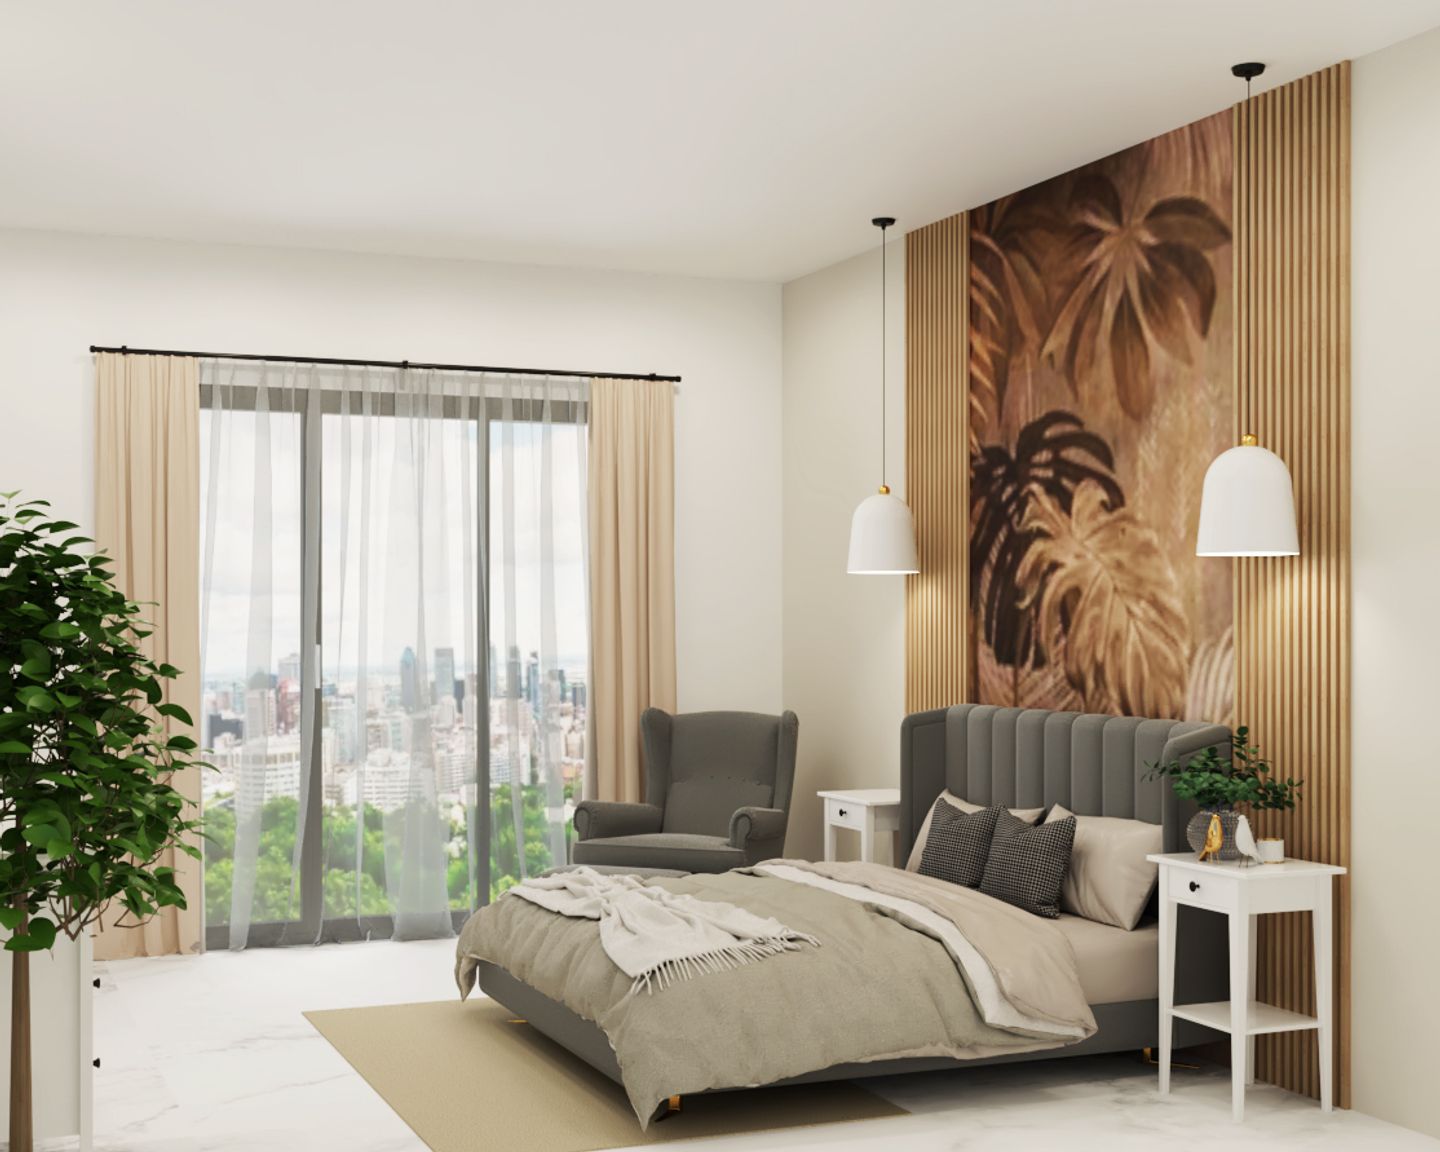 Master Bedroom With Botanical Wallpaper - Livspace